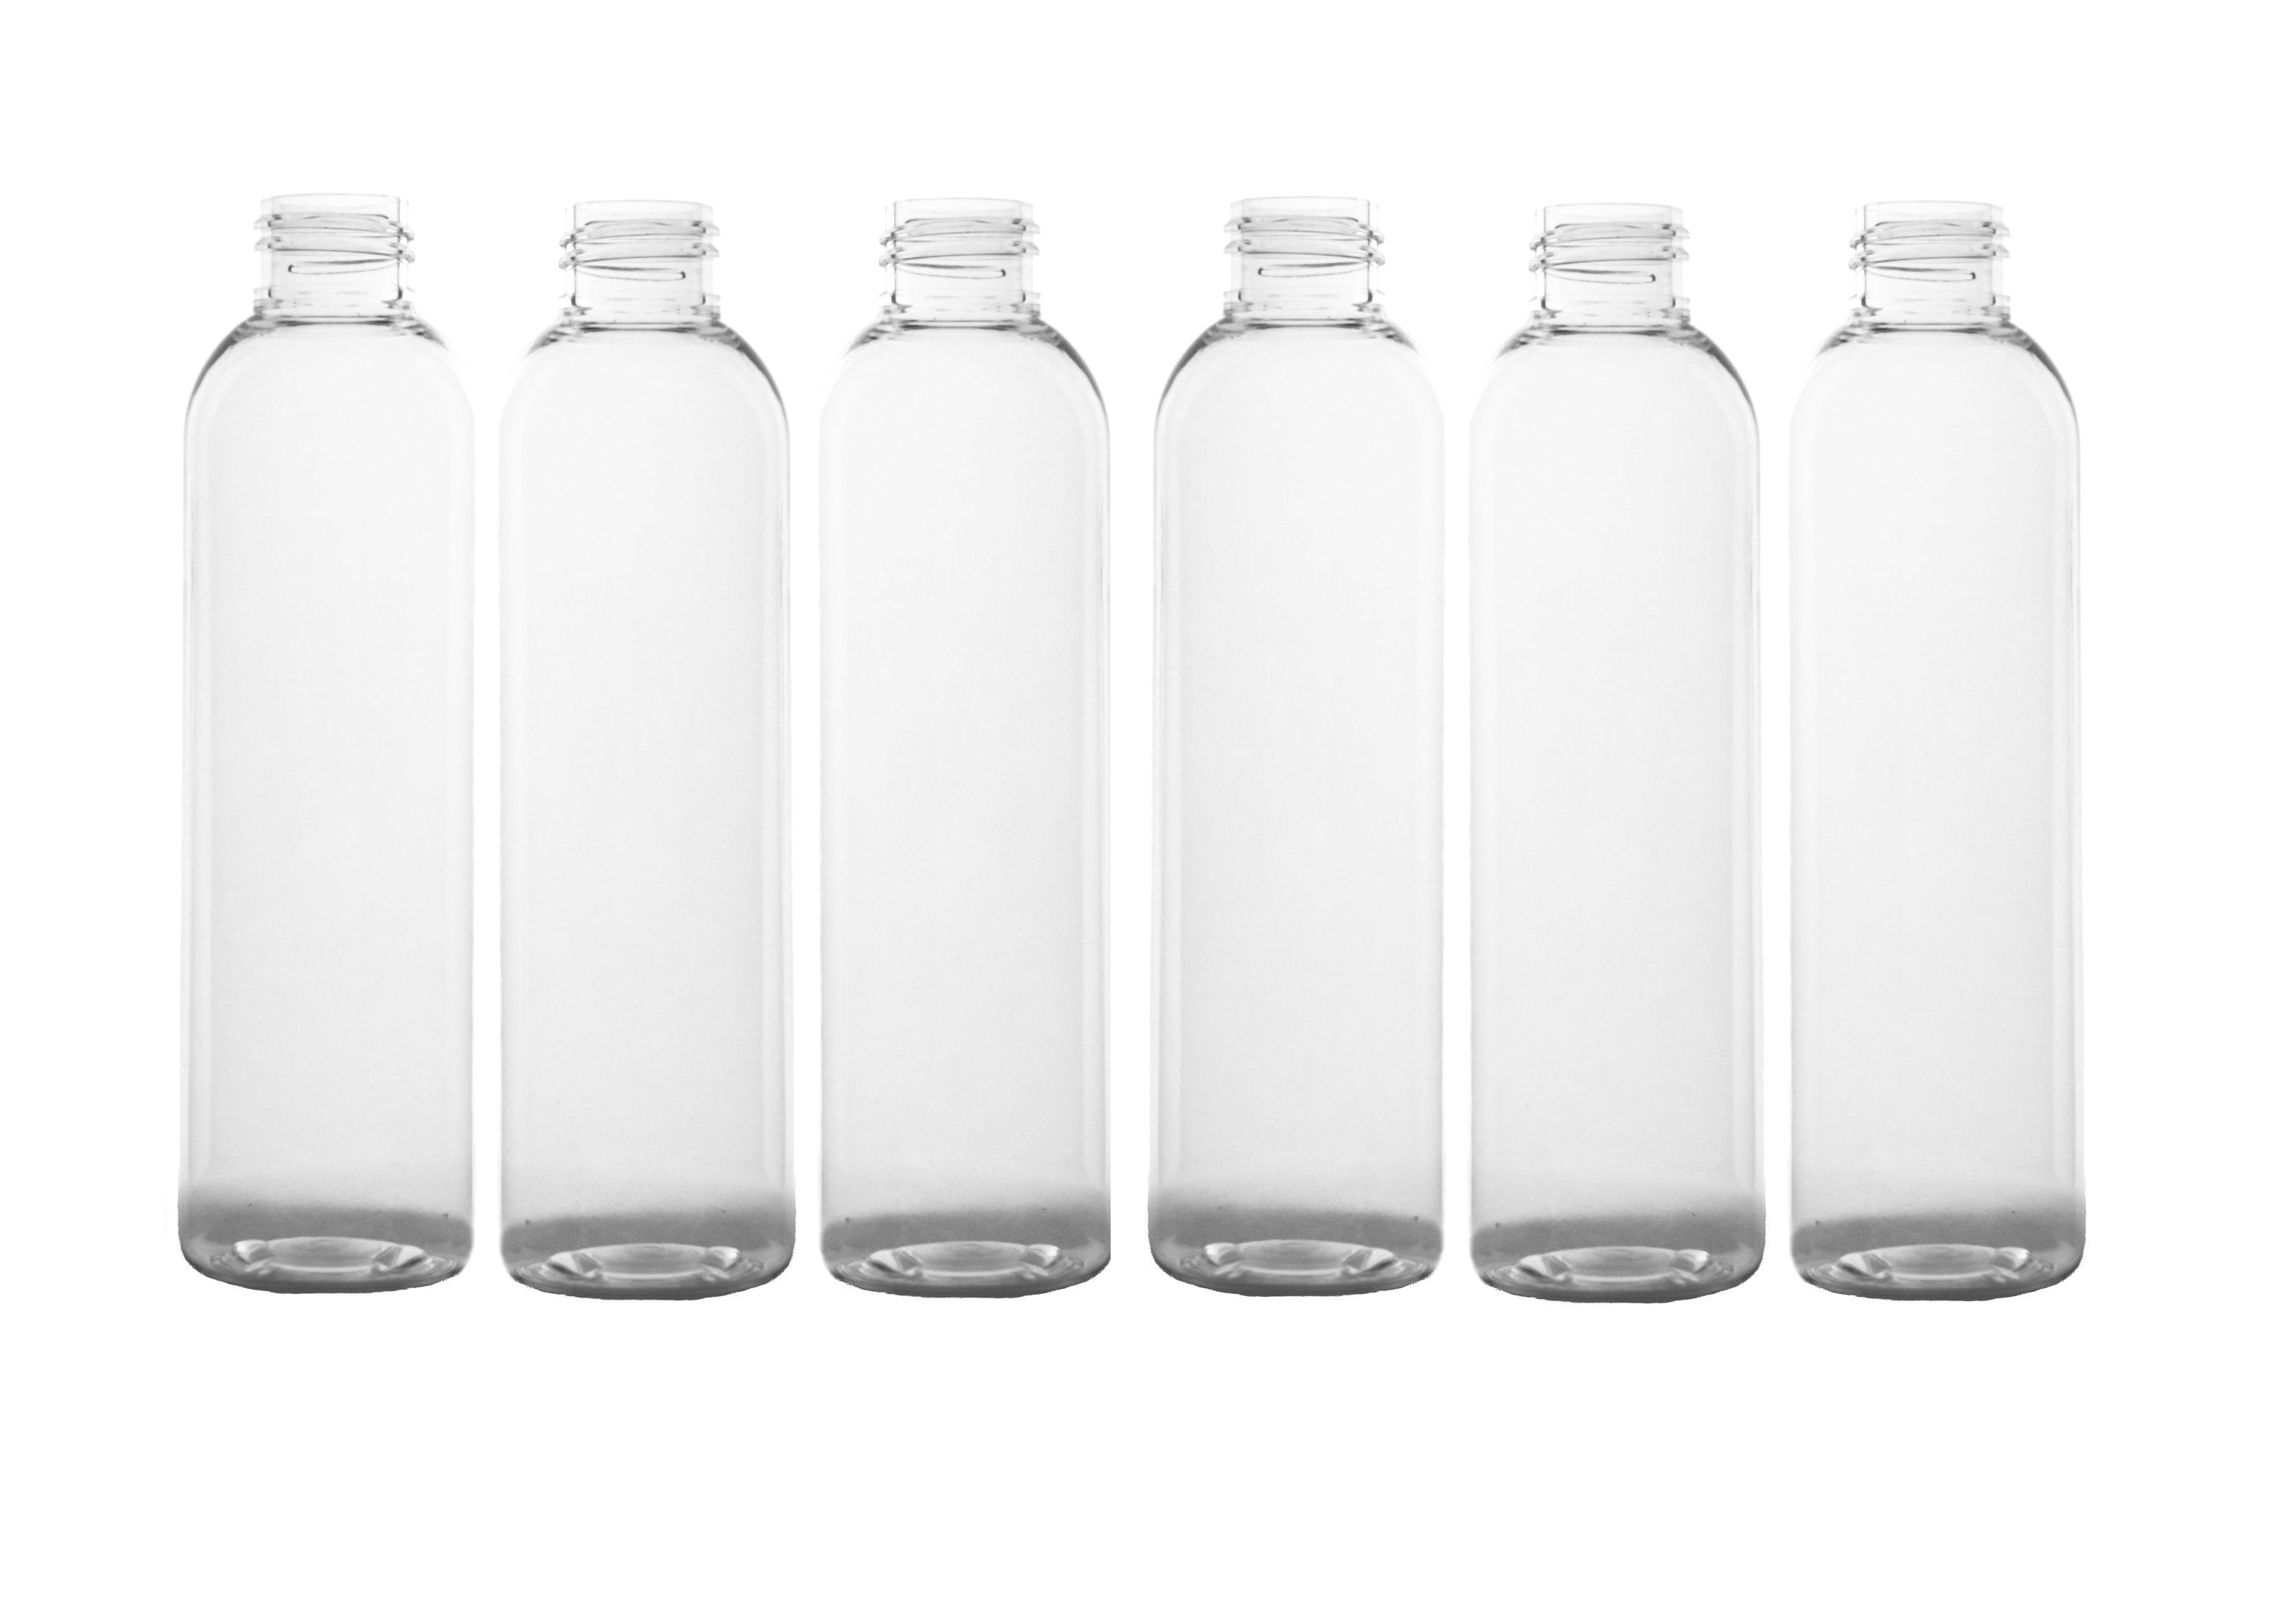 Plastic Empty Bottles - 8 oz. Travel Containers Clear PET Plastic ...